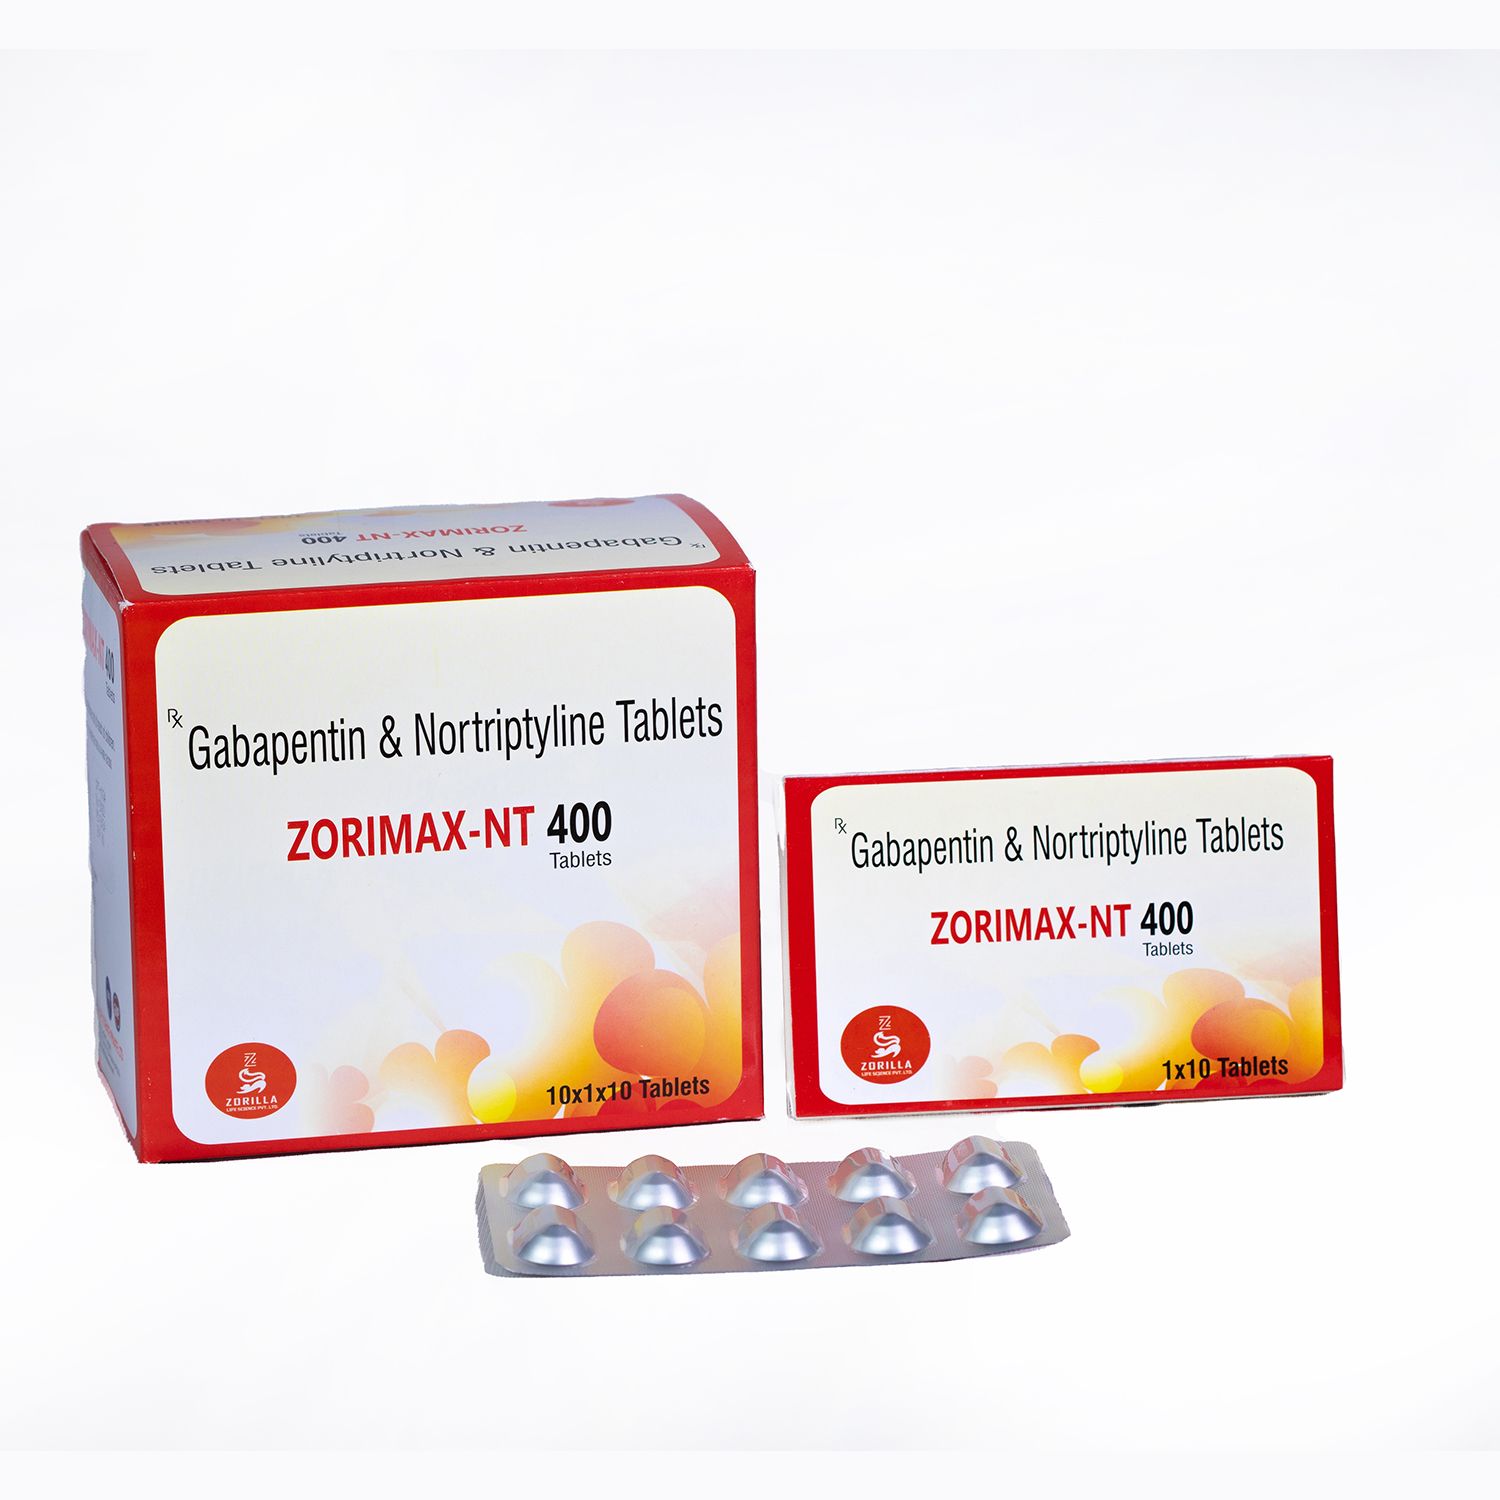 Buy Zorimax NT 400 Gabapentin at Best Price Online